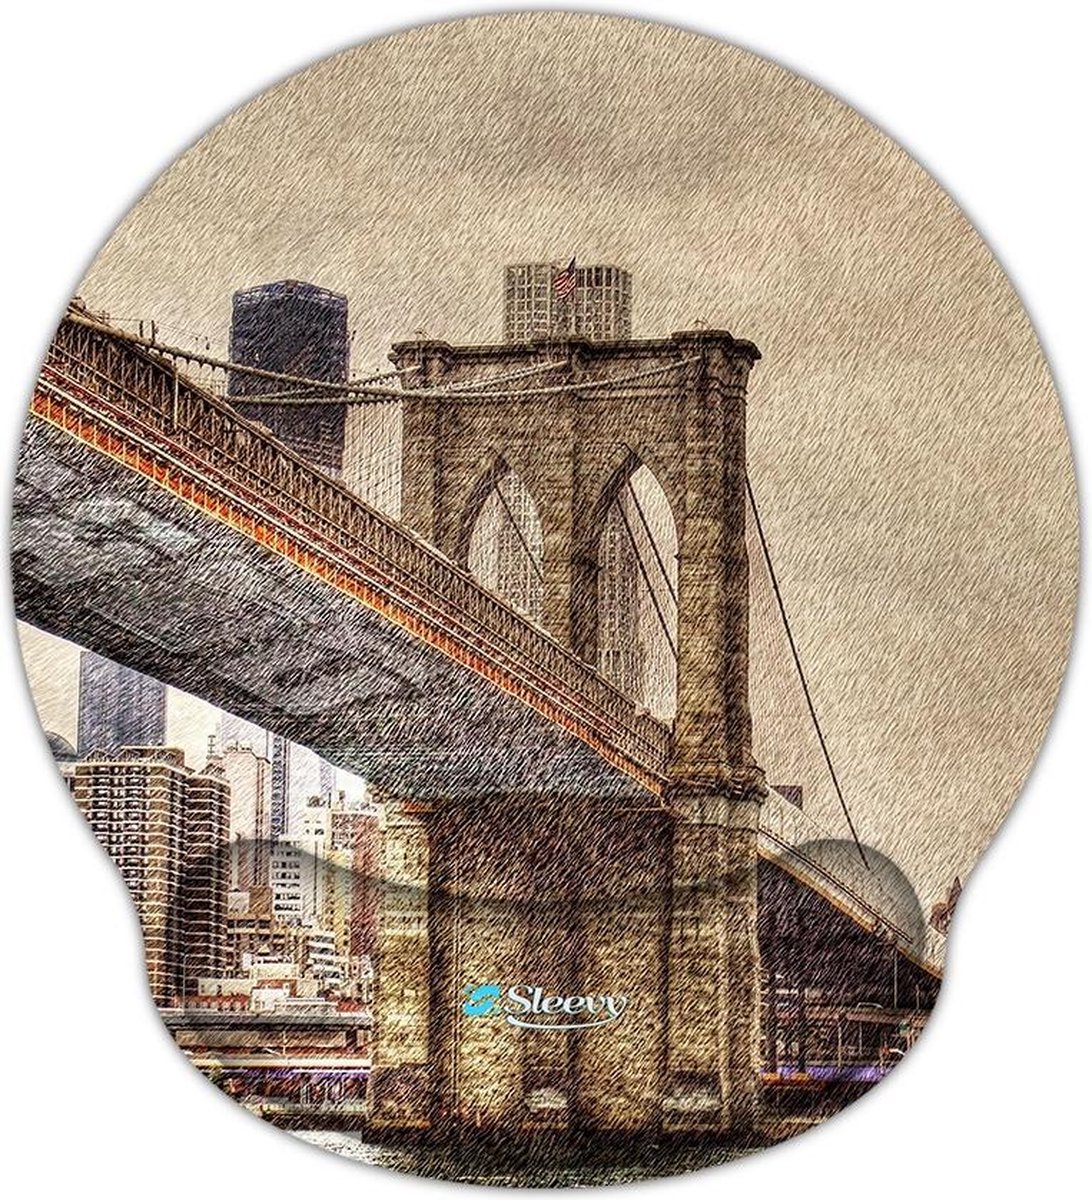 Muismat polssteun Brooklyn Bridge uit New York - Sleevy - mousepad - Collectie 100+ designs